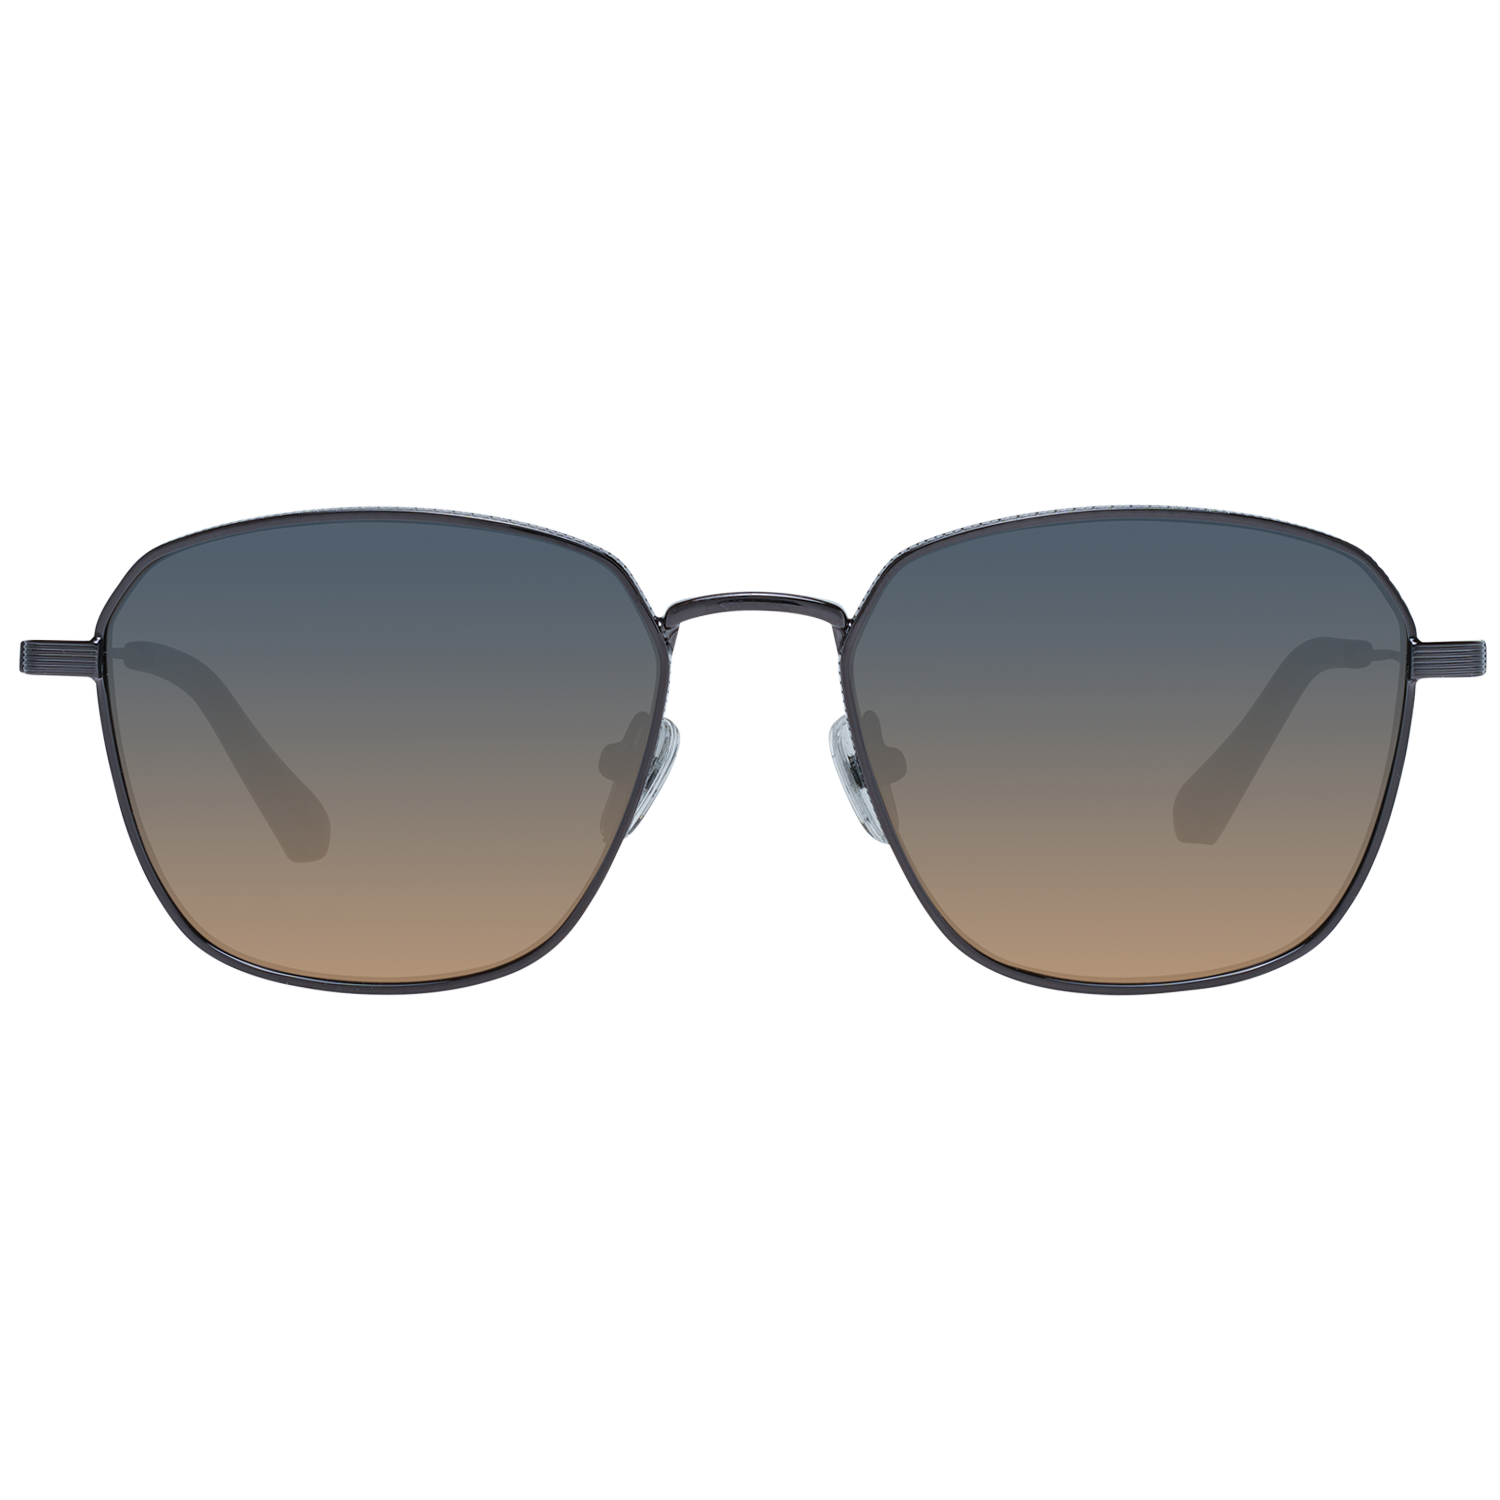 Ted Baker Sunglasses Ted Baker Sunglasses TB1652 900 53 Eyeglasses Eyewear UK USA Australia 